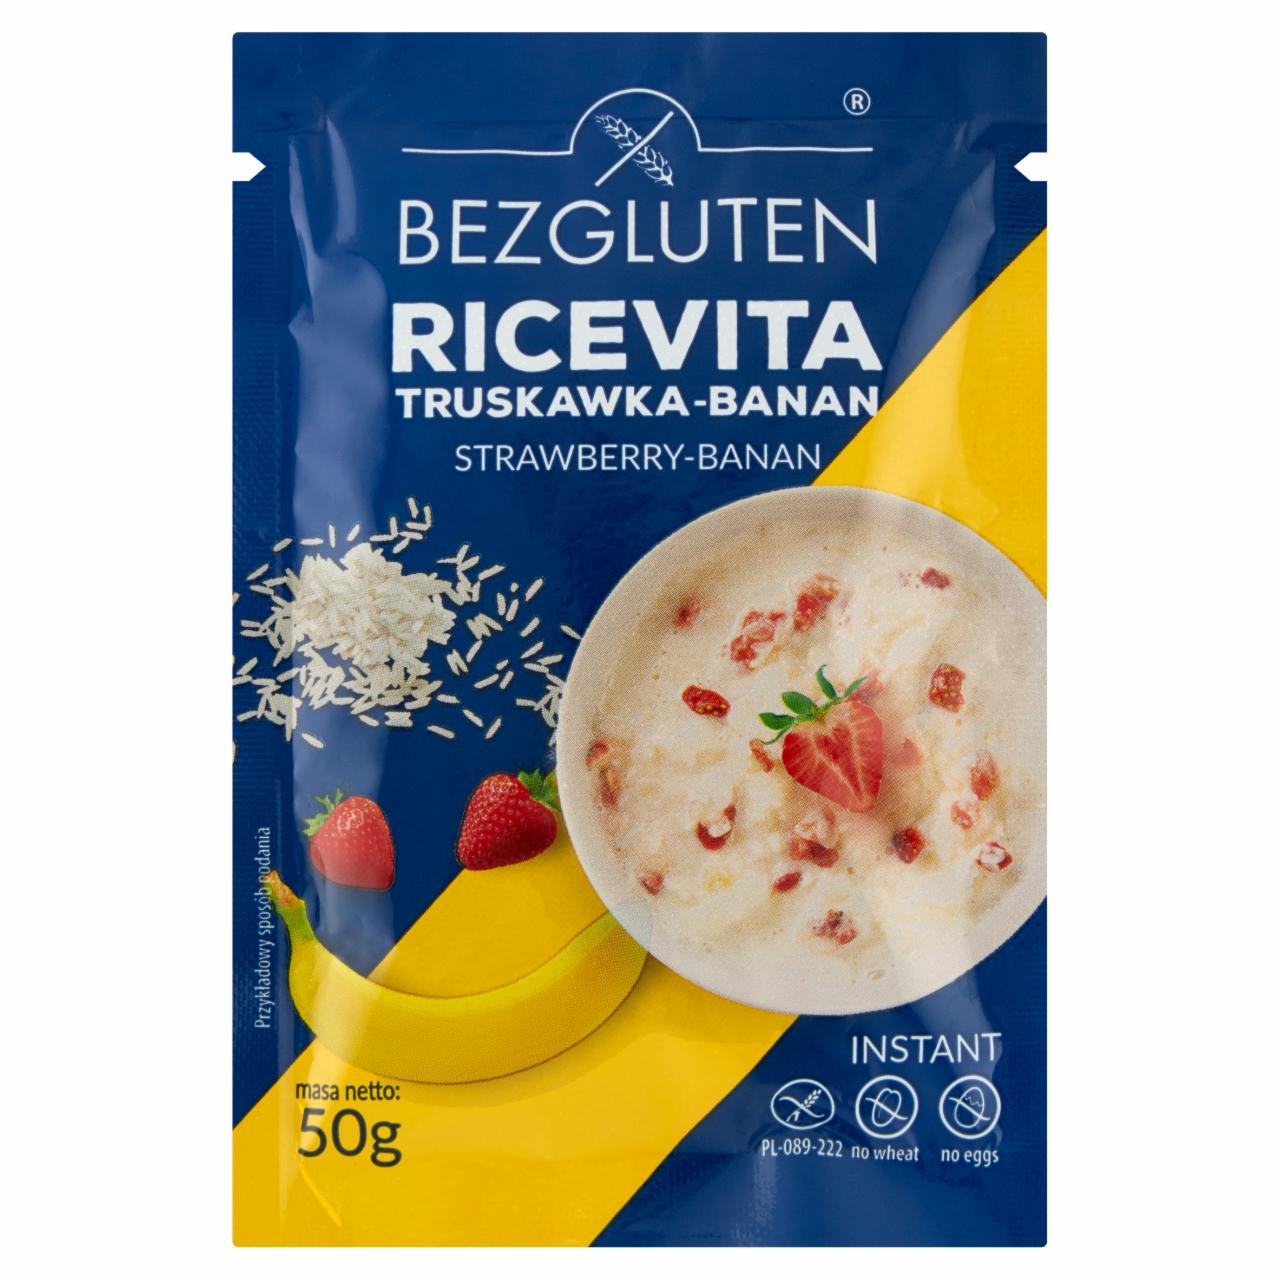 Zdjęcia - Bezgluten RiceVita Płatki ryżowe truskawka-banan 50 g